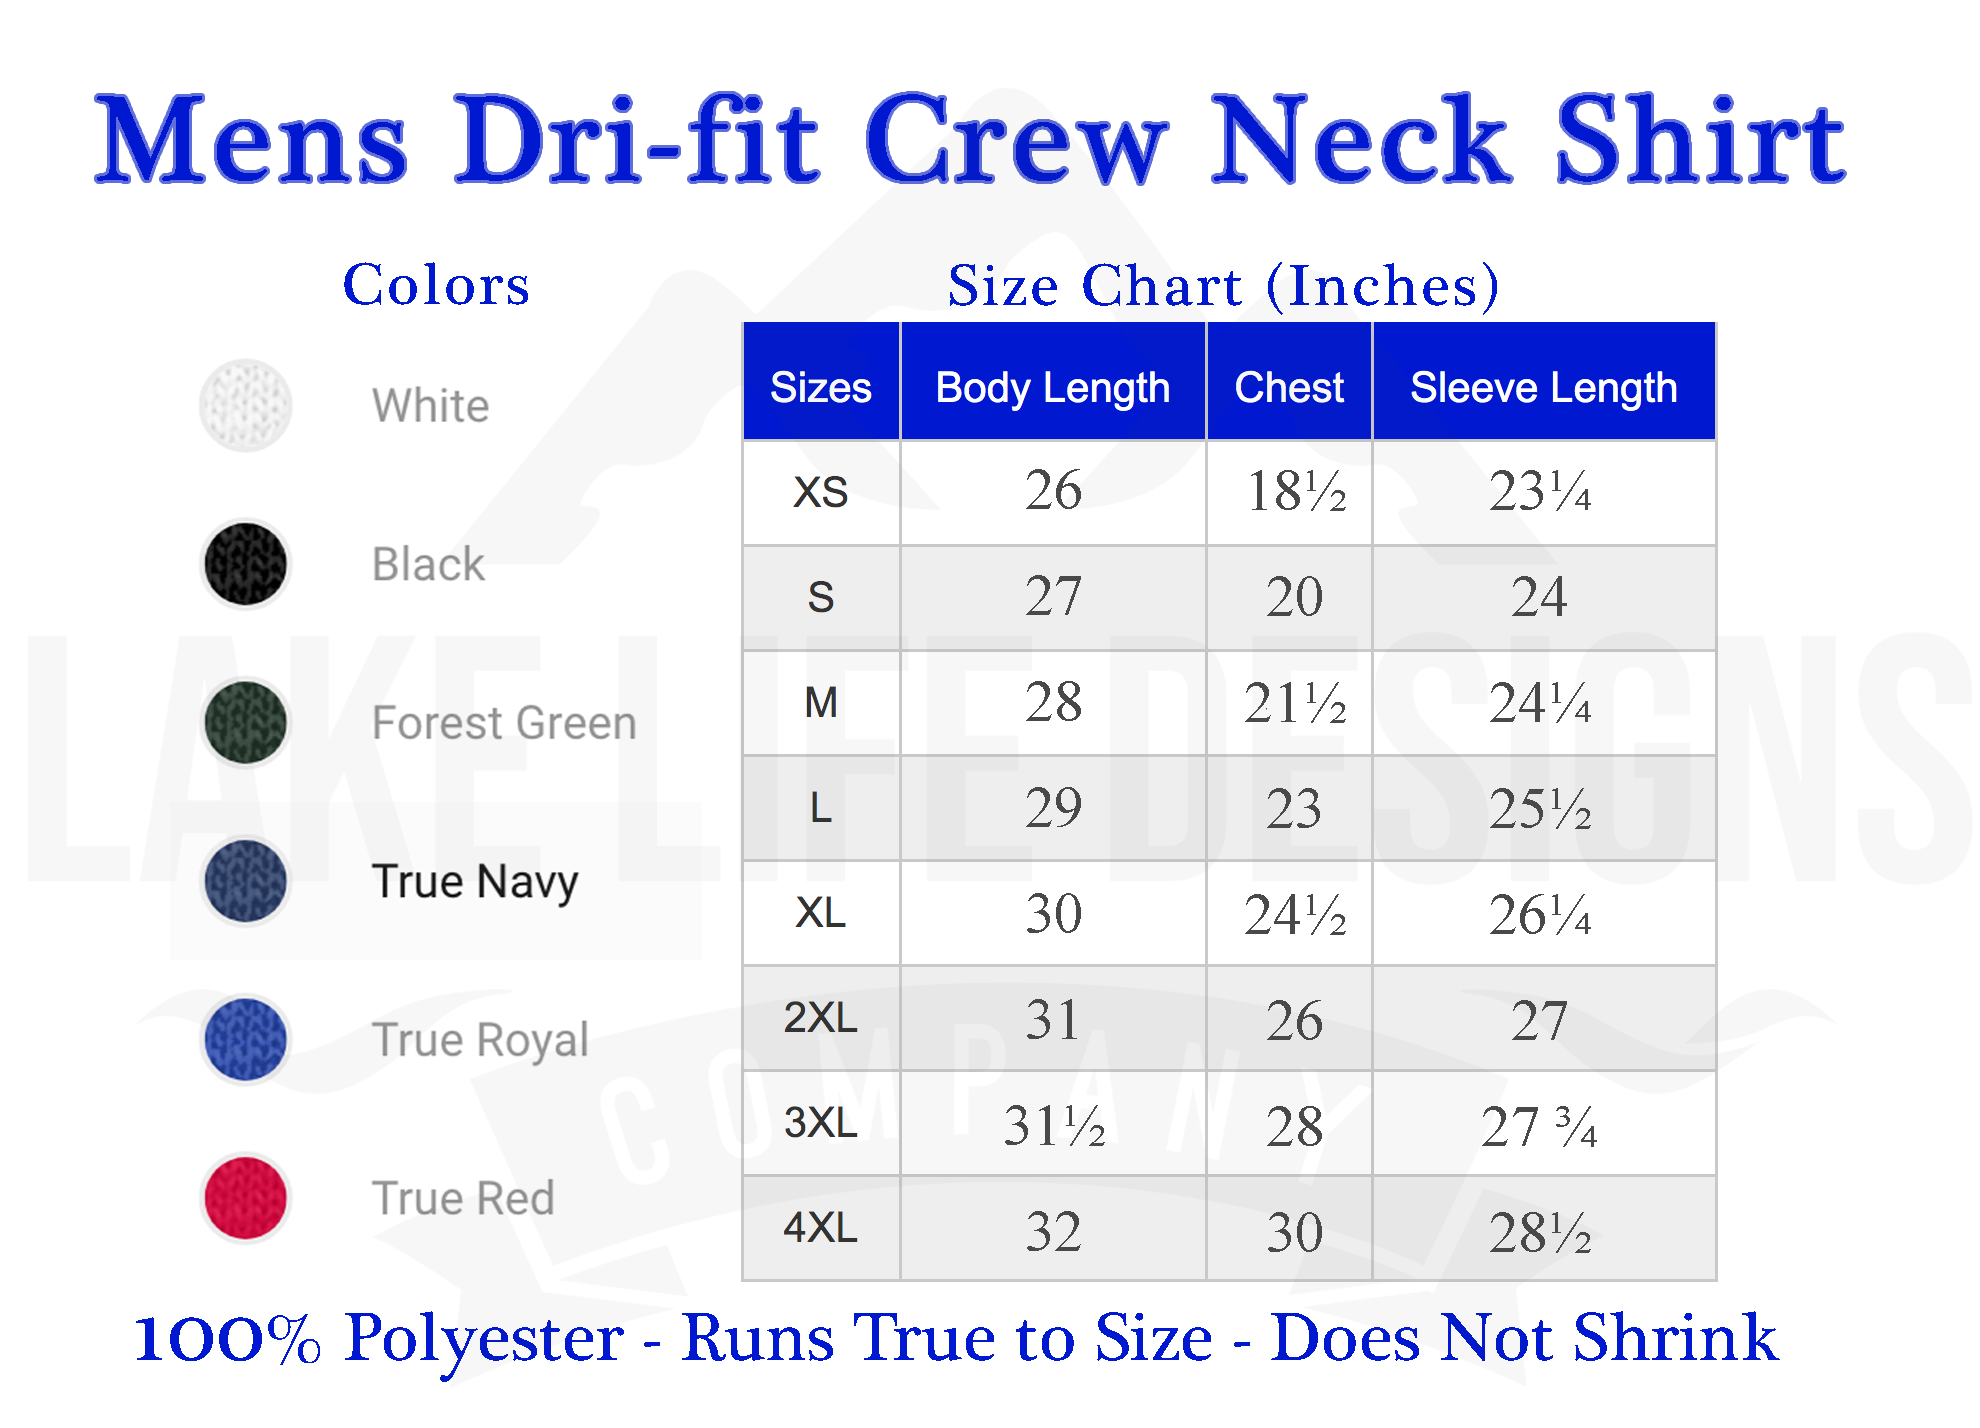 Rough River Lake Life Dri-fit Boating Shirt - Breathable Material- Men's Long Sleeve Moisture Wicking Tee - Kentucky Lake